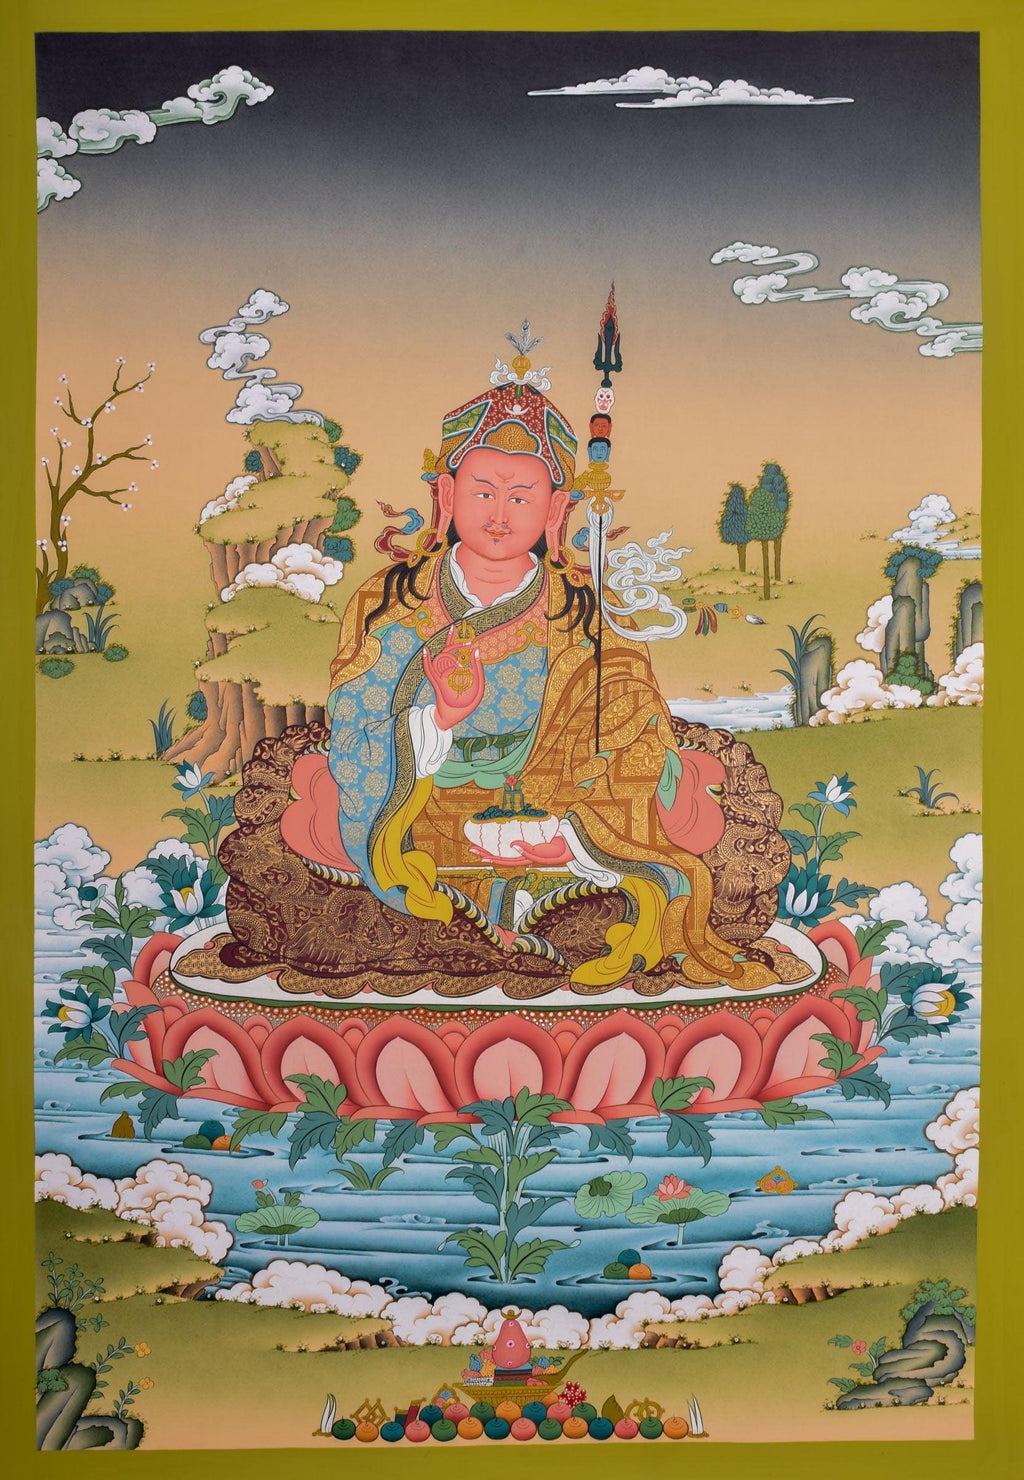 Special Spiritual Buddha Zen Meditation mudraa Statue x-mas gift gold green  | eBay